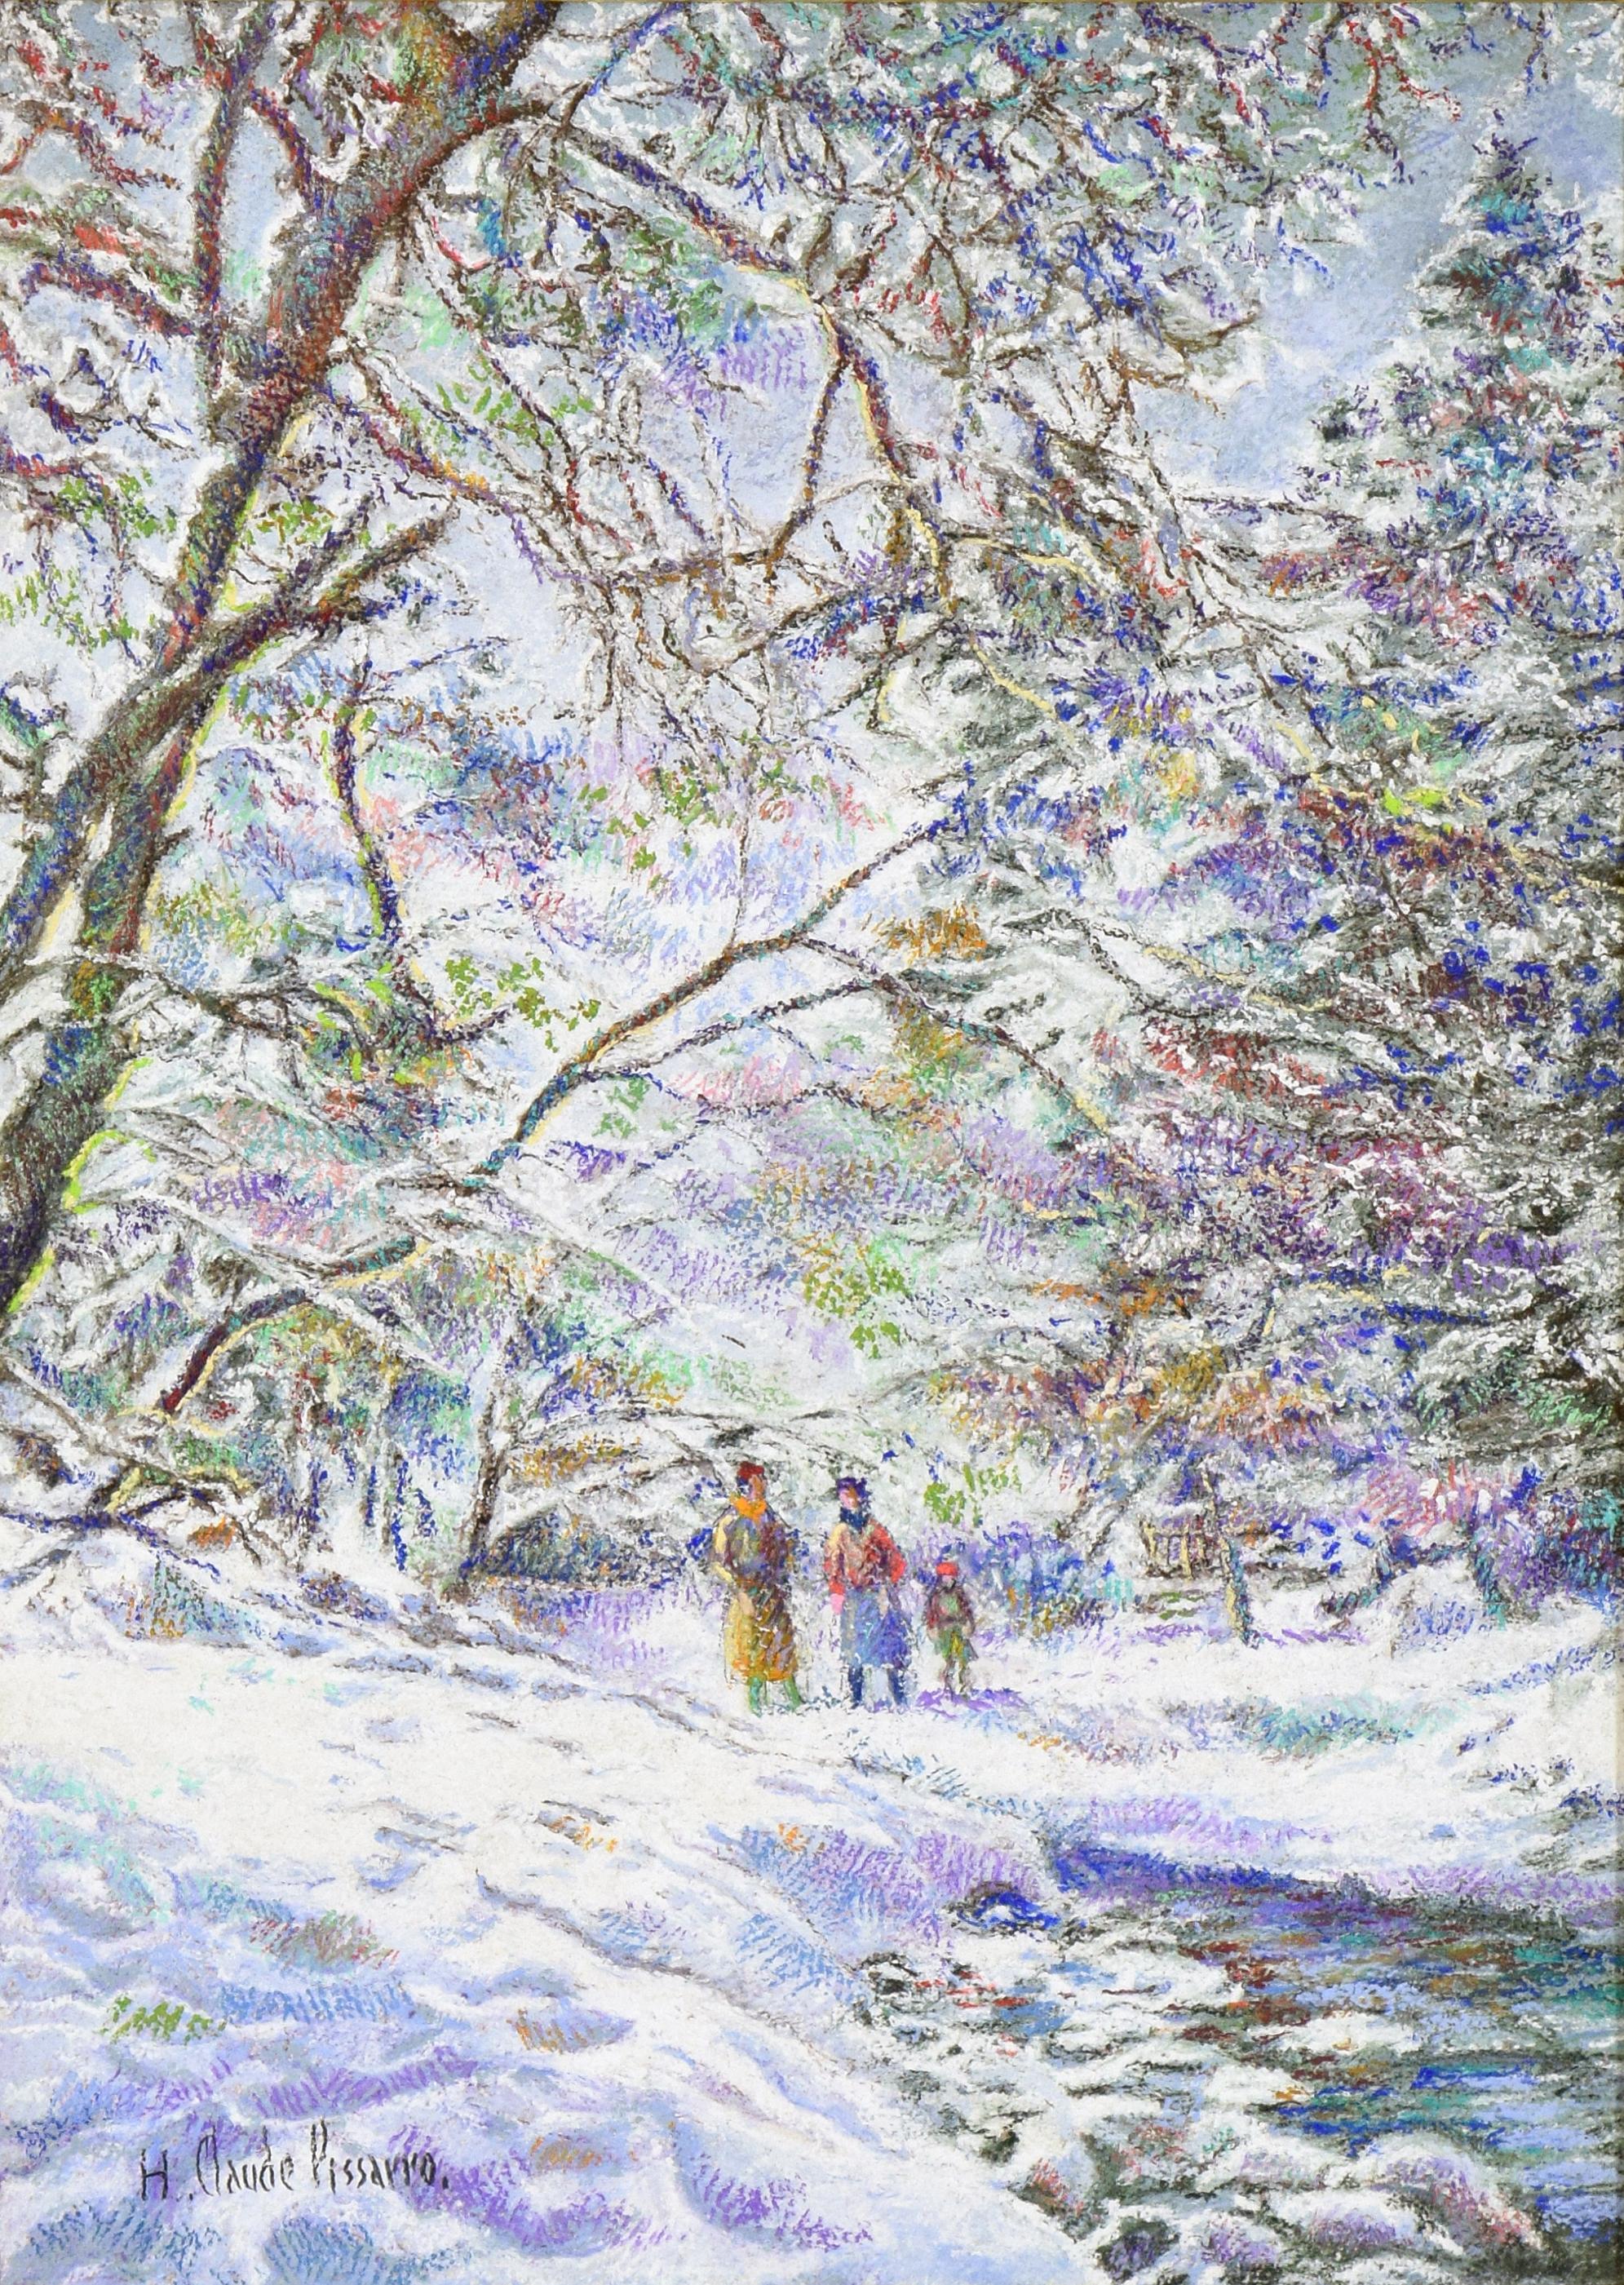 Snow scene by Hughes Claude Pissarro, Cantepie, Sous la Neige